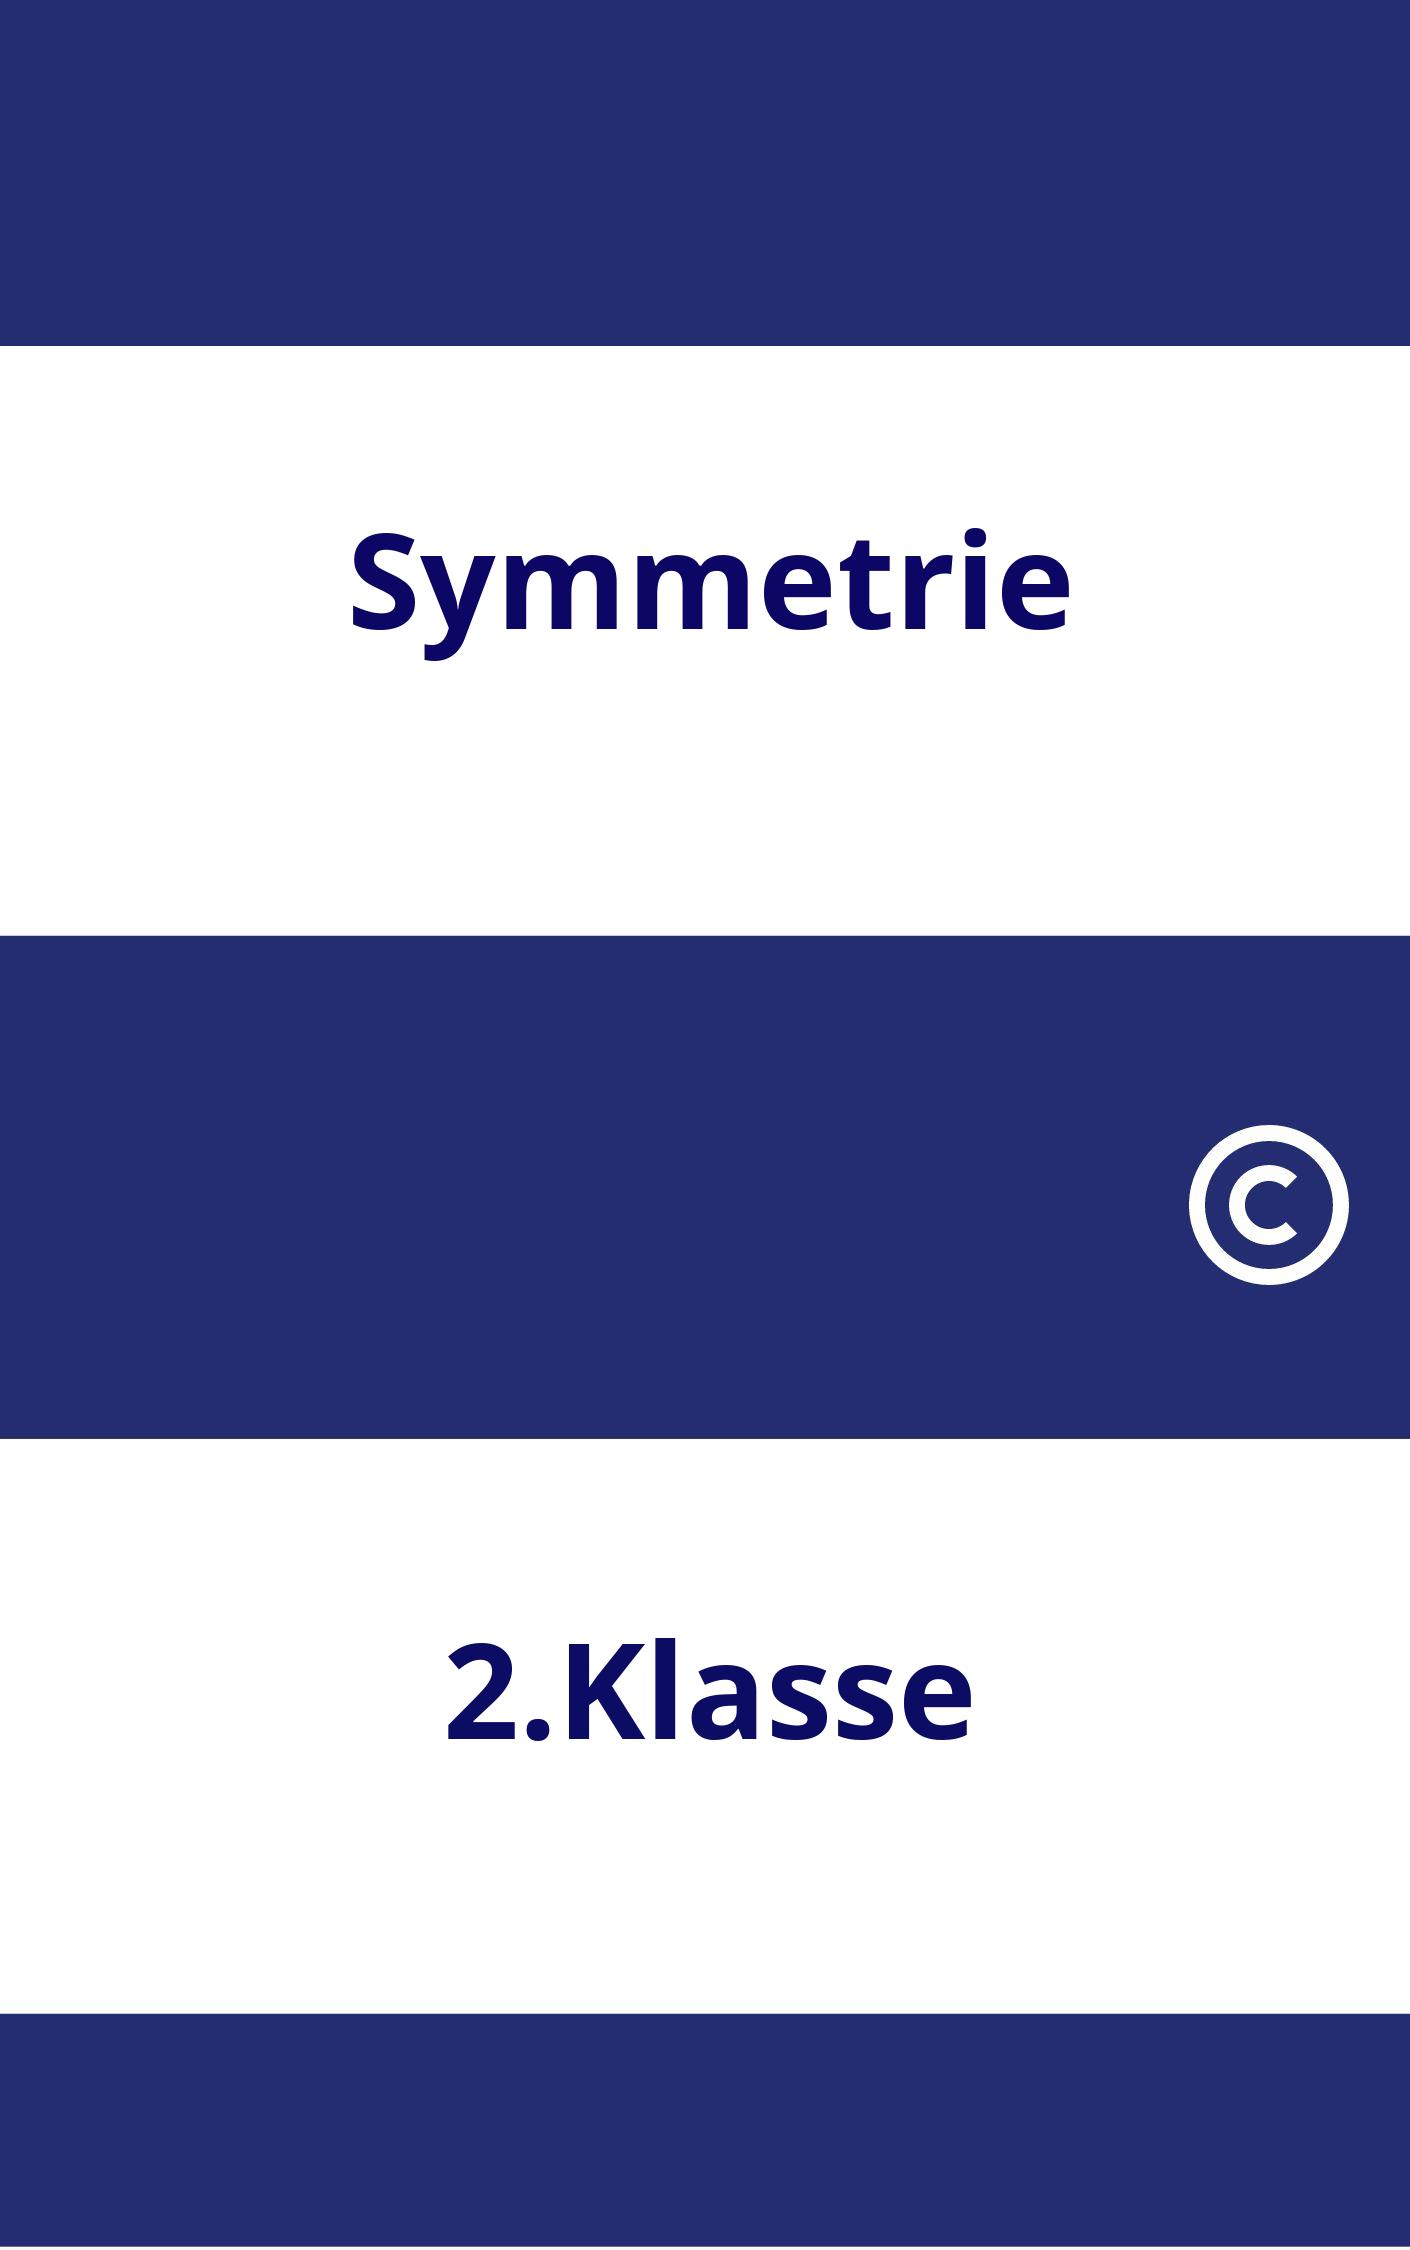 Symmetrie 2.Klasse Arbeitsblätter PDF